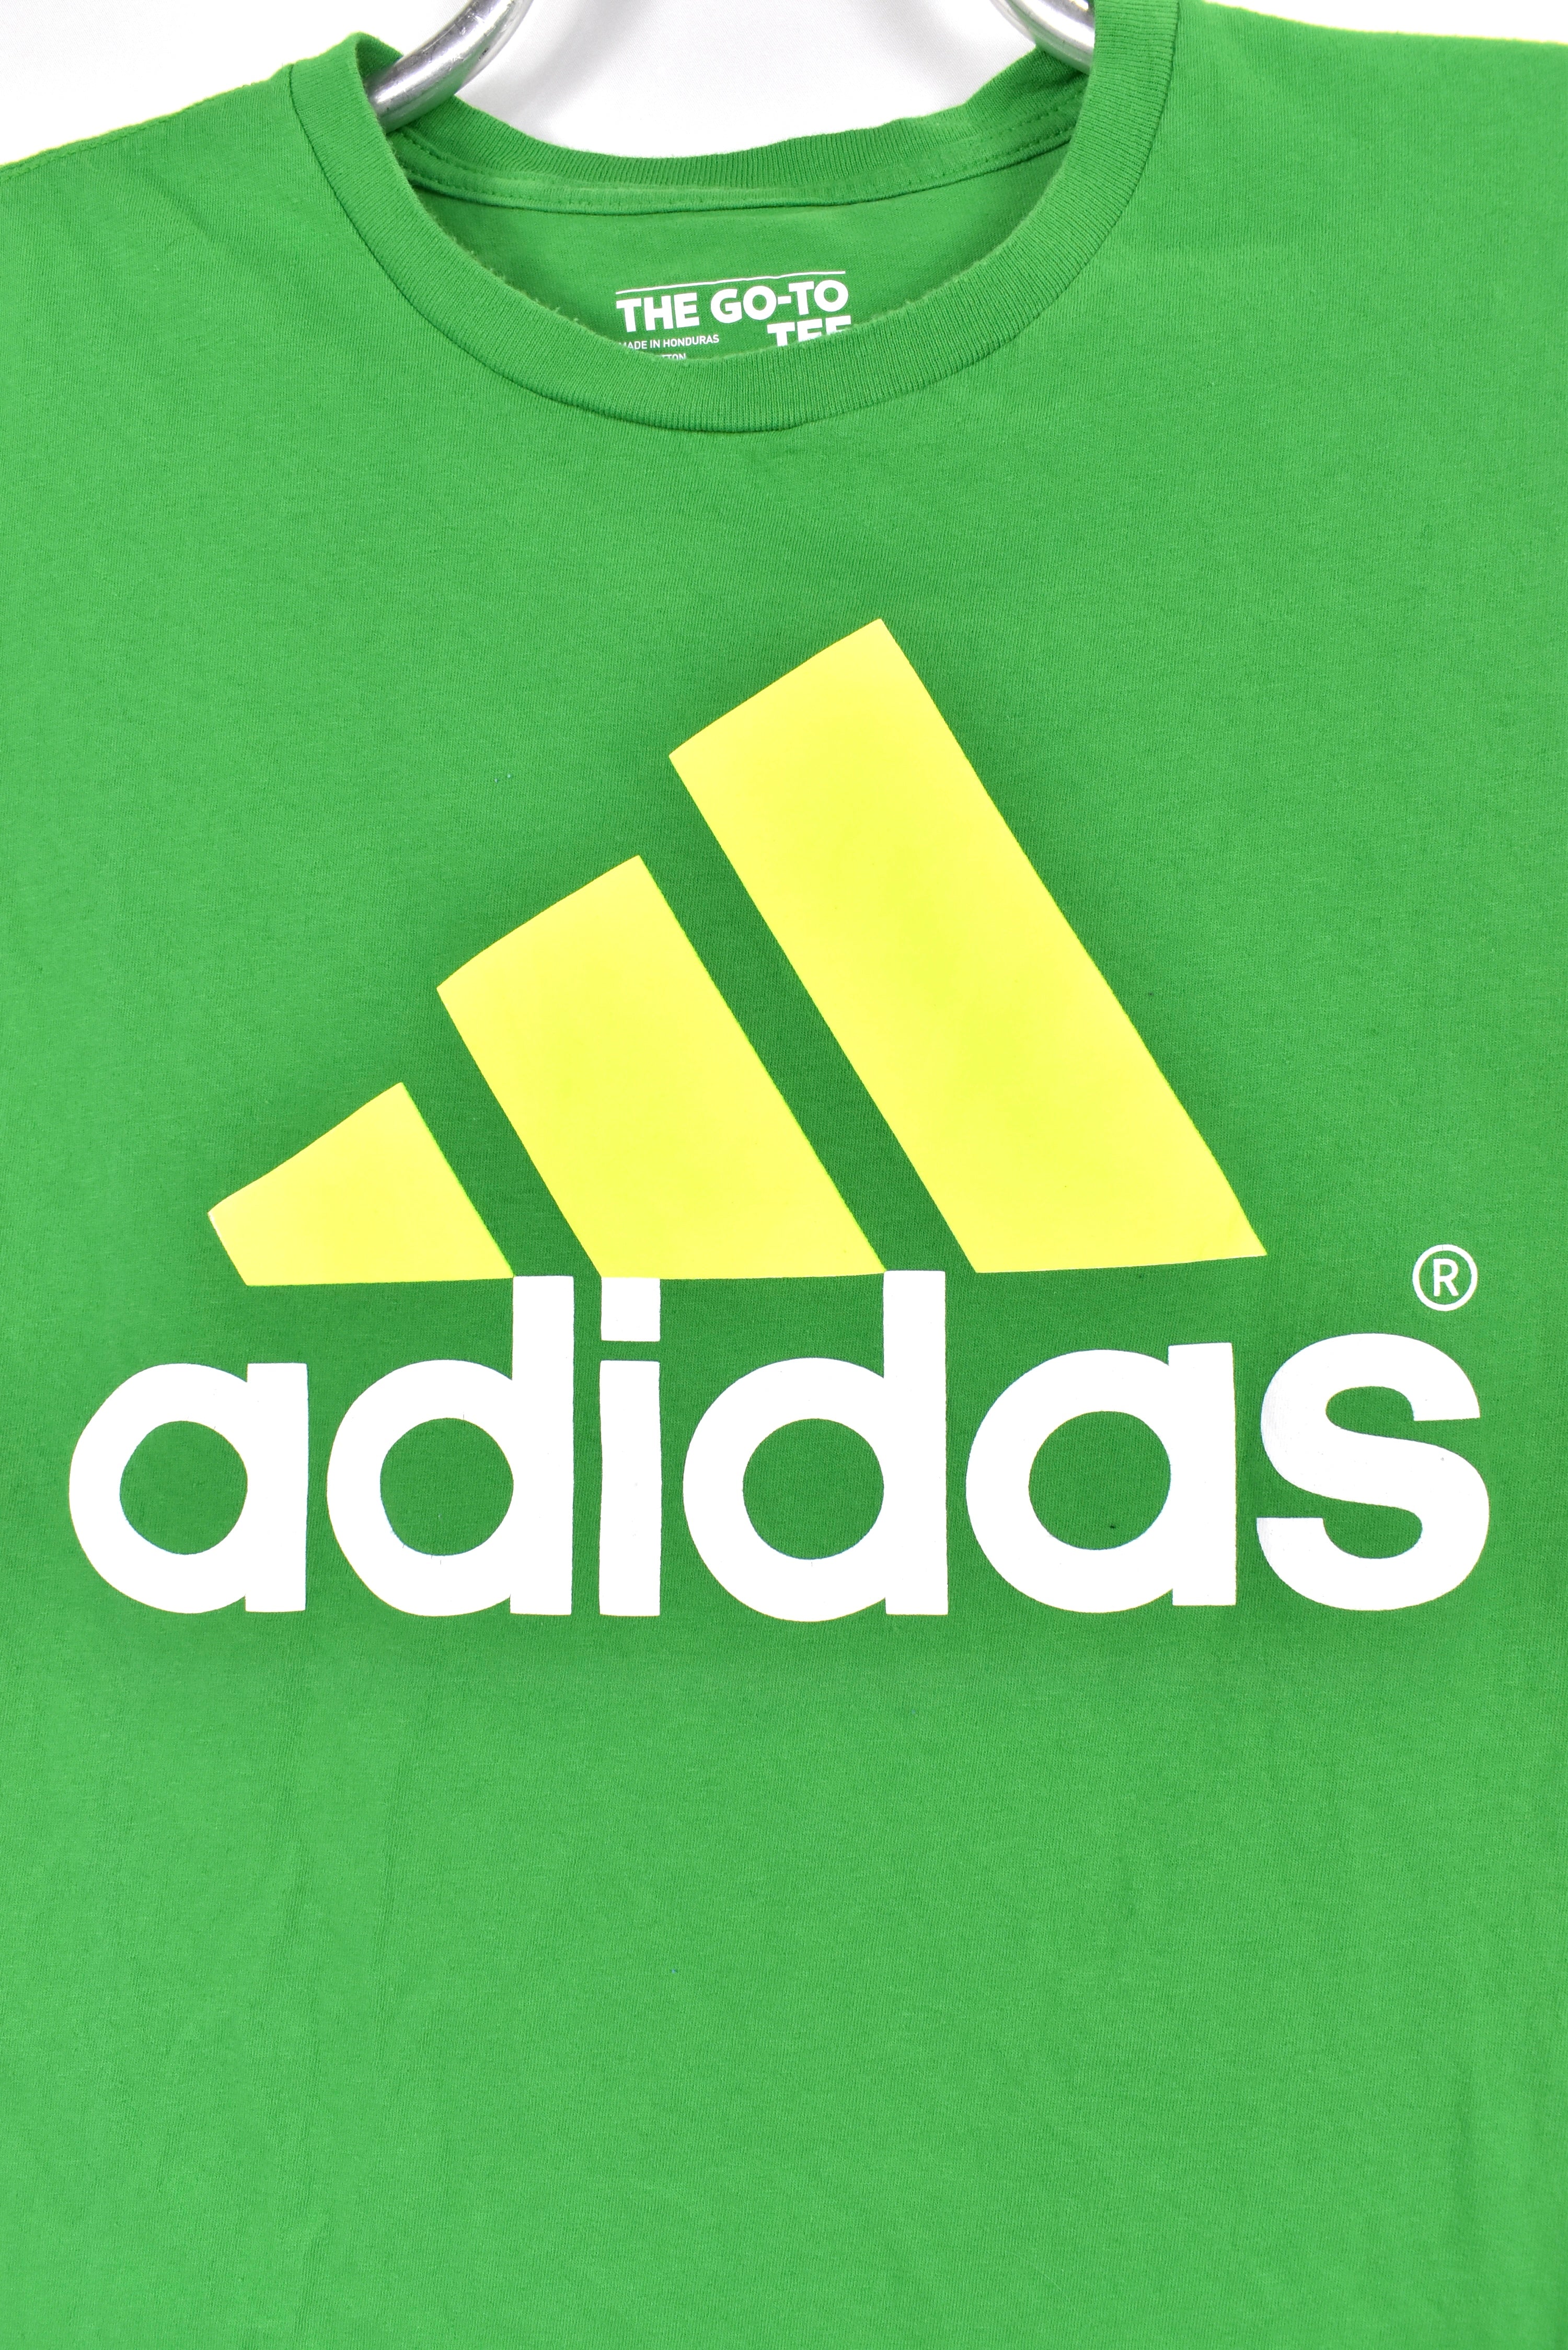 Women's modern Adidas shirt, green graphic tee - AU M ADIDAS